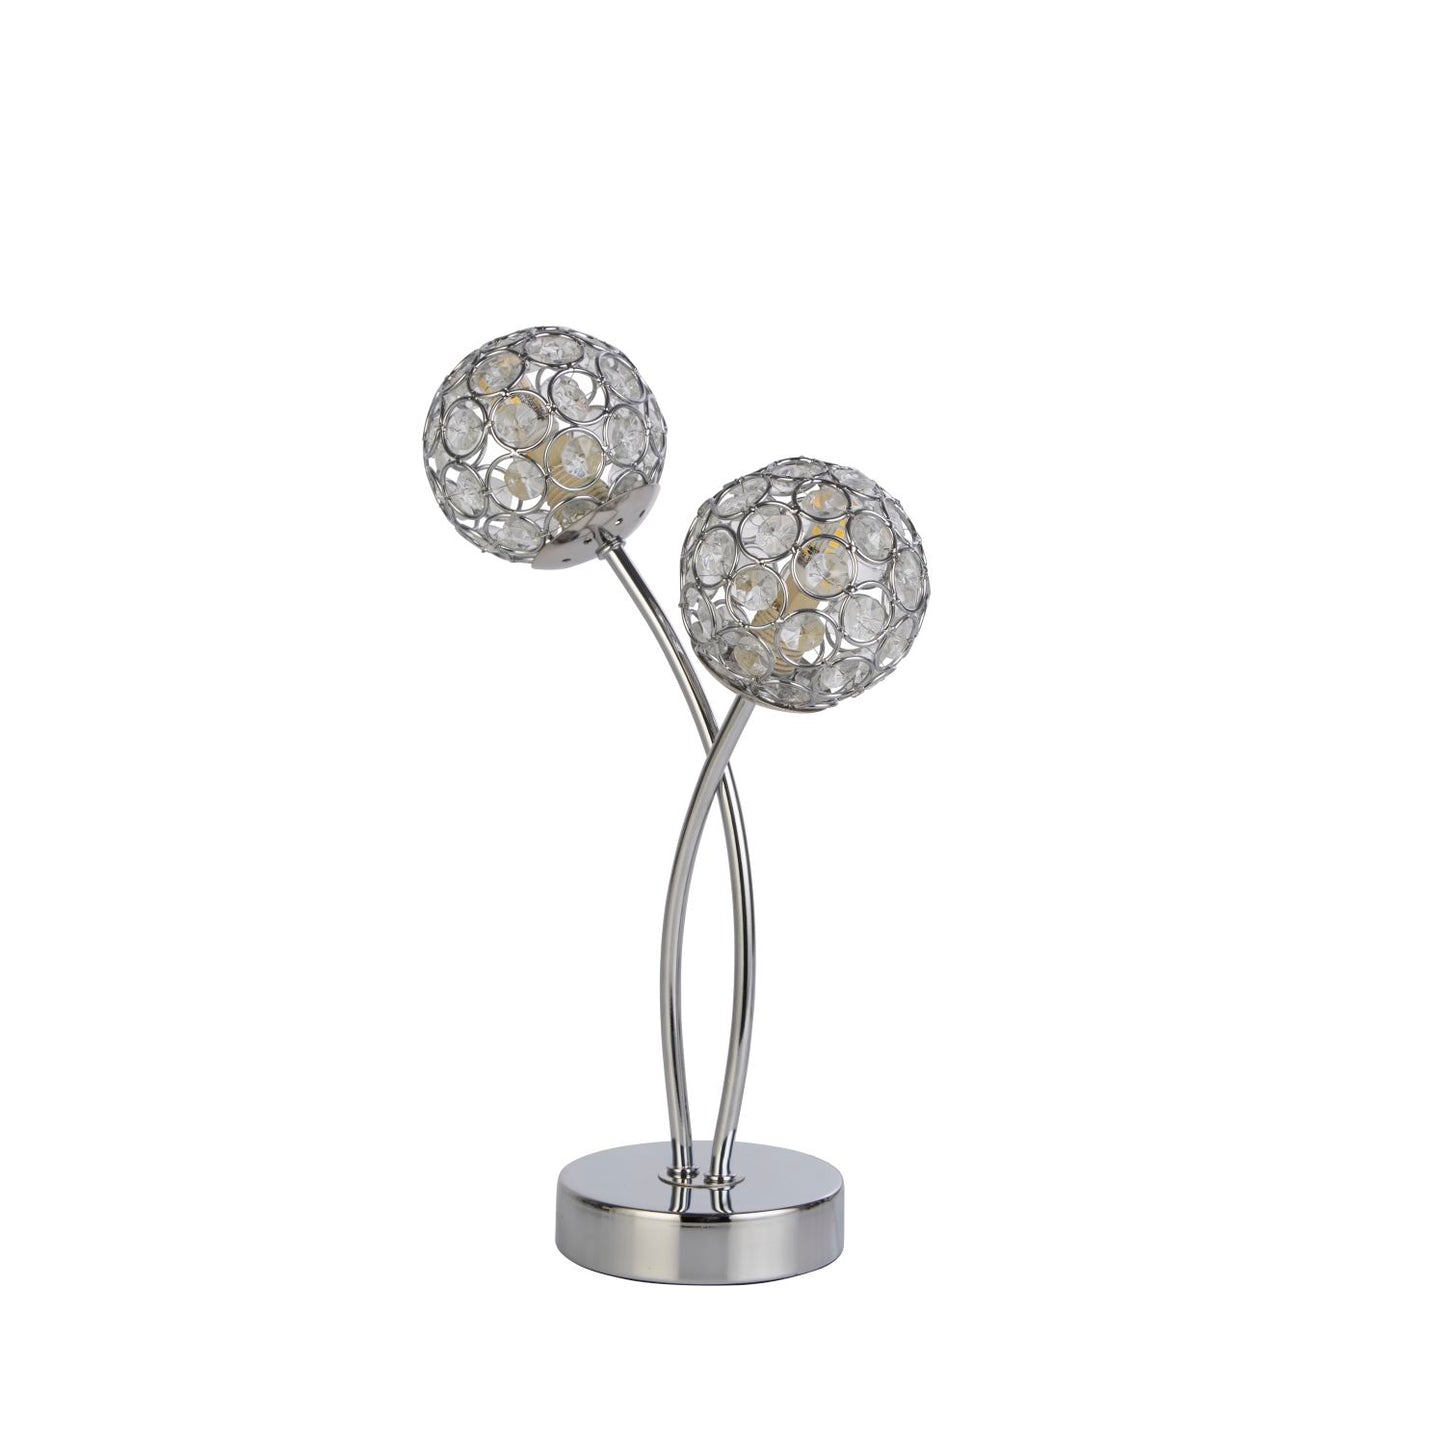 2 Light Chrome Table Lamp With Glass Bead Ball Shade